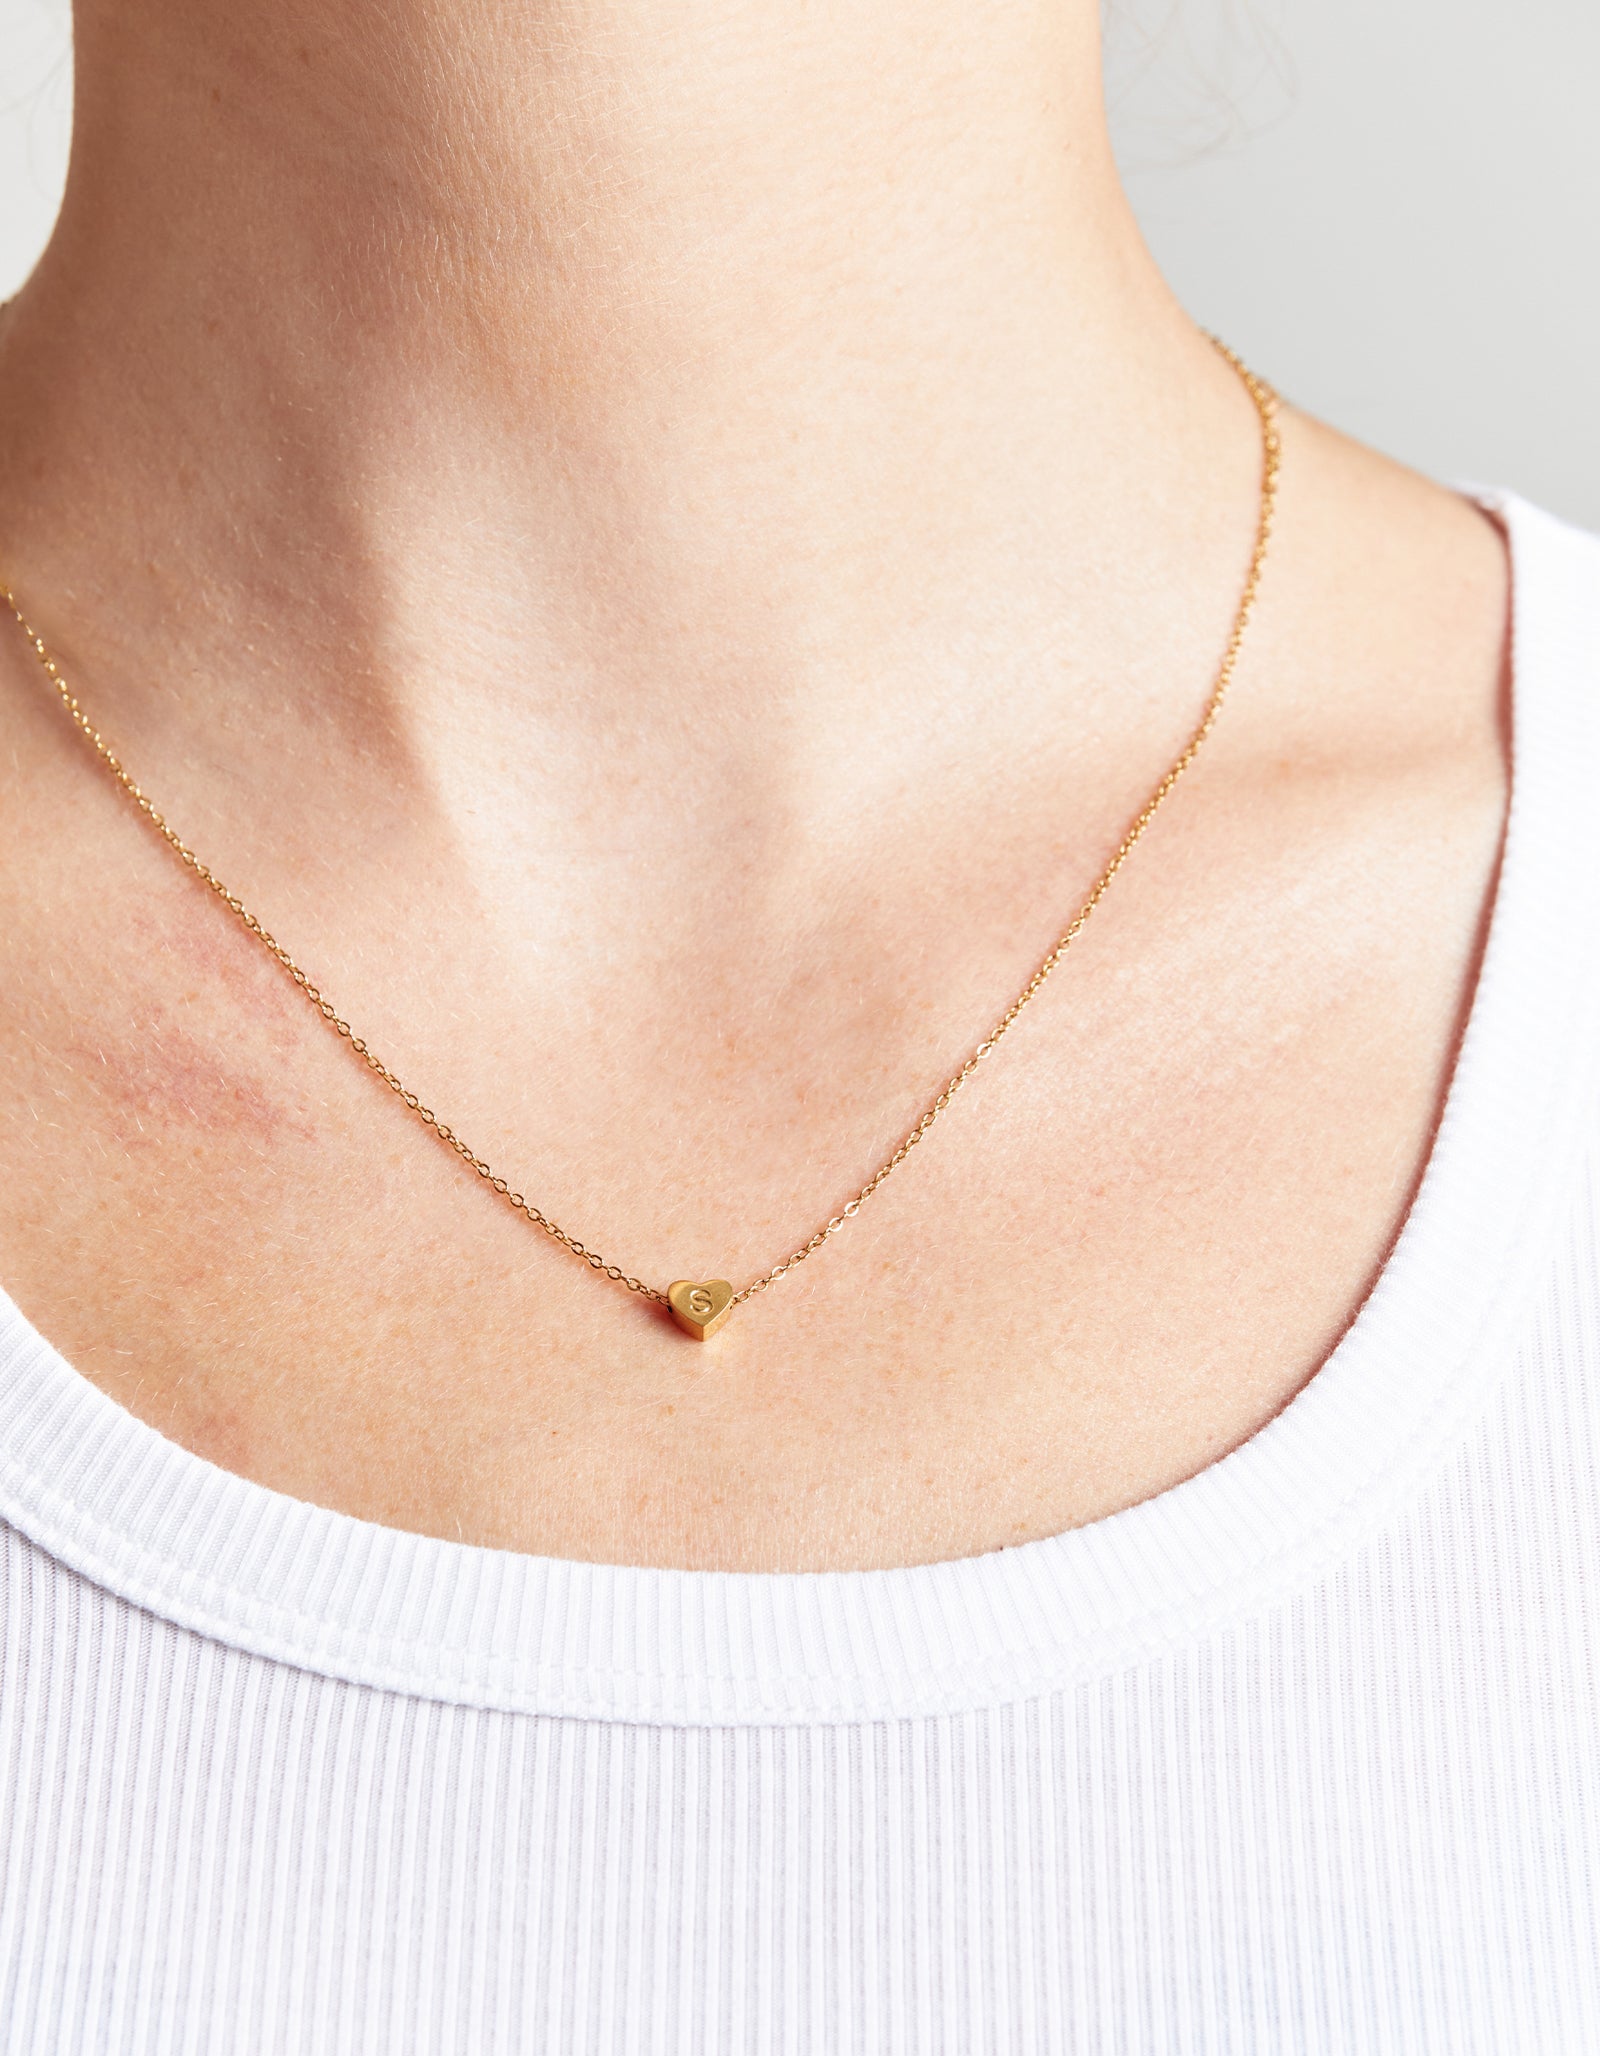 HEART INITIAL NECKLACE – Liza Echeverry Jewelry